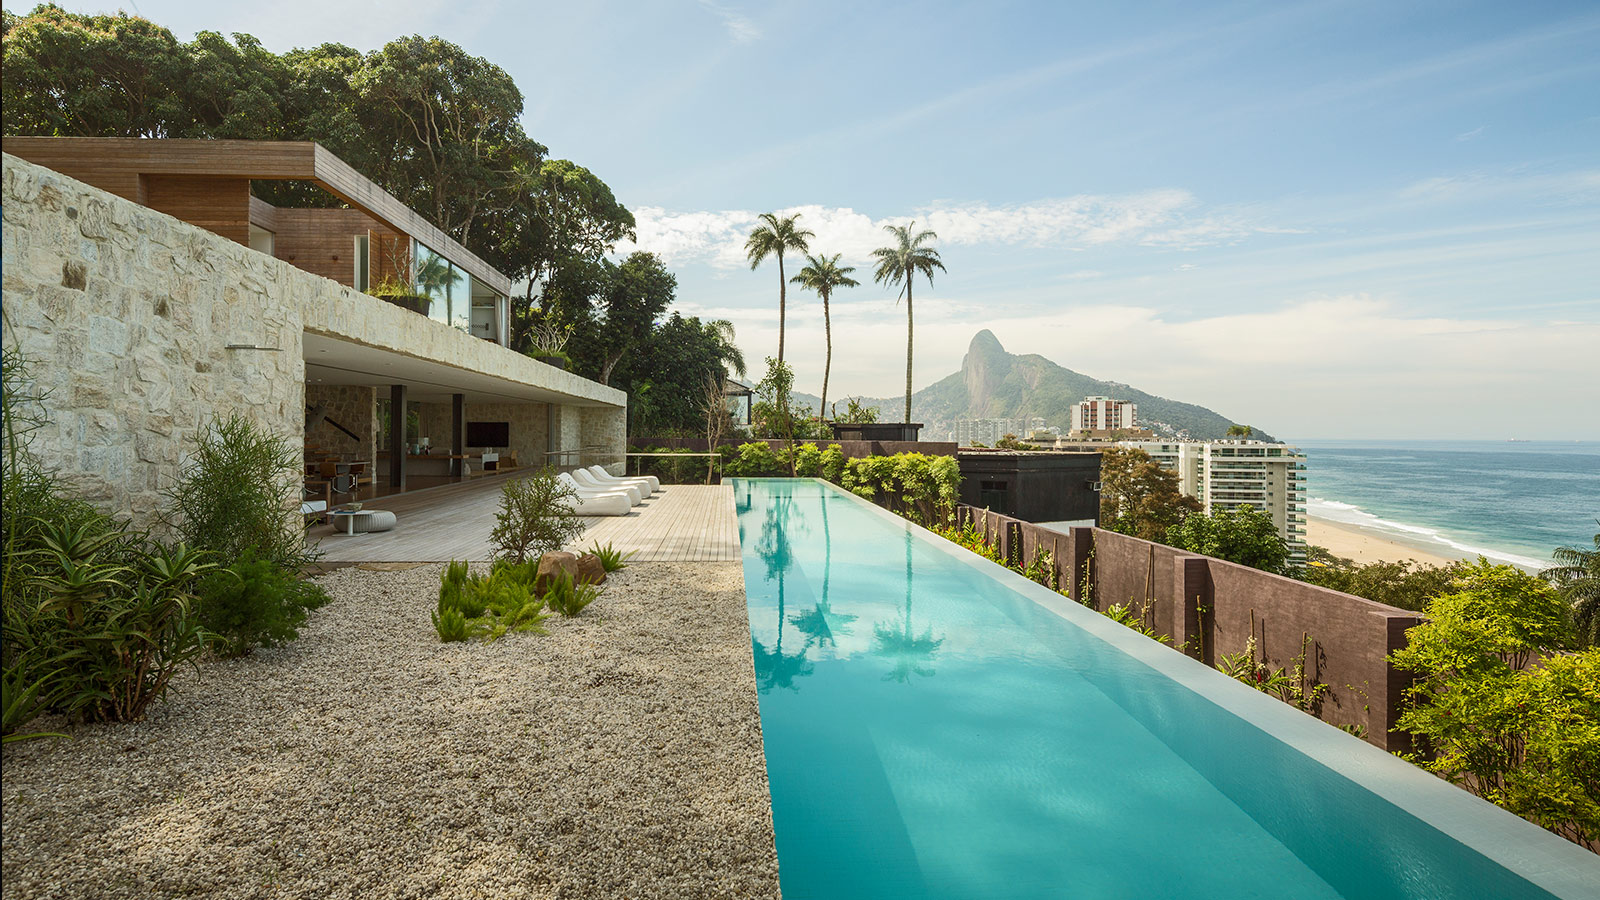 A luxurious modern house in Rio de Janeiro, Brazil that praises the landscape